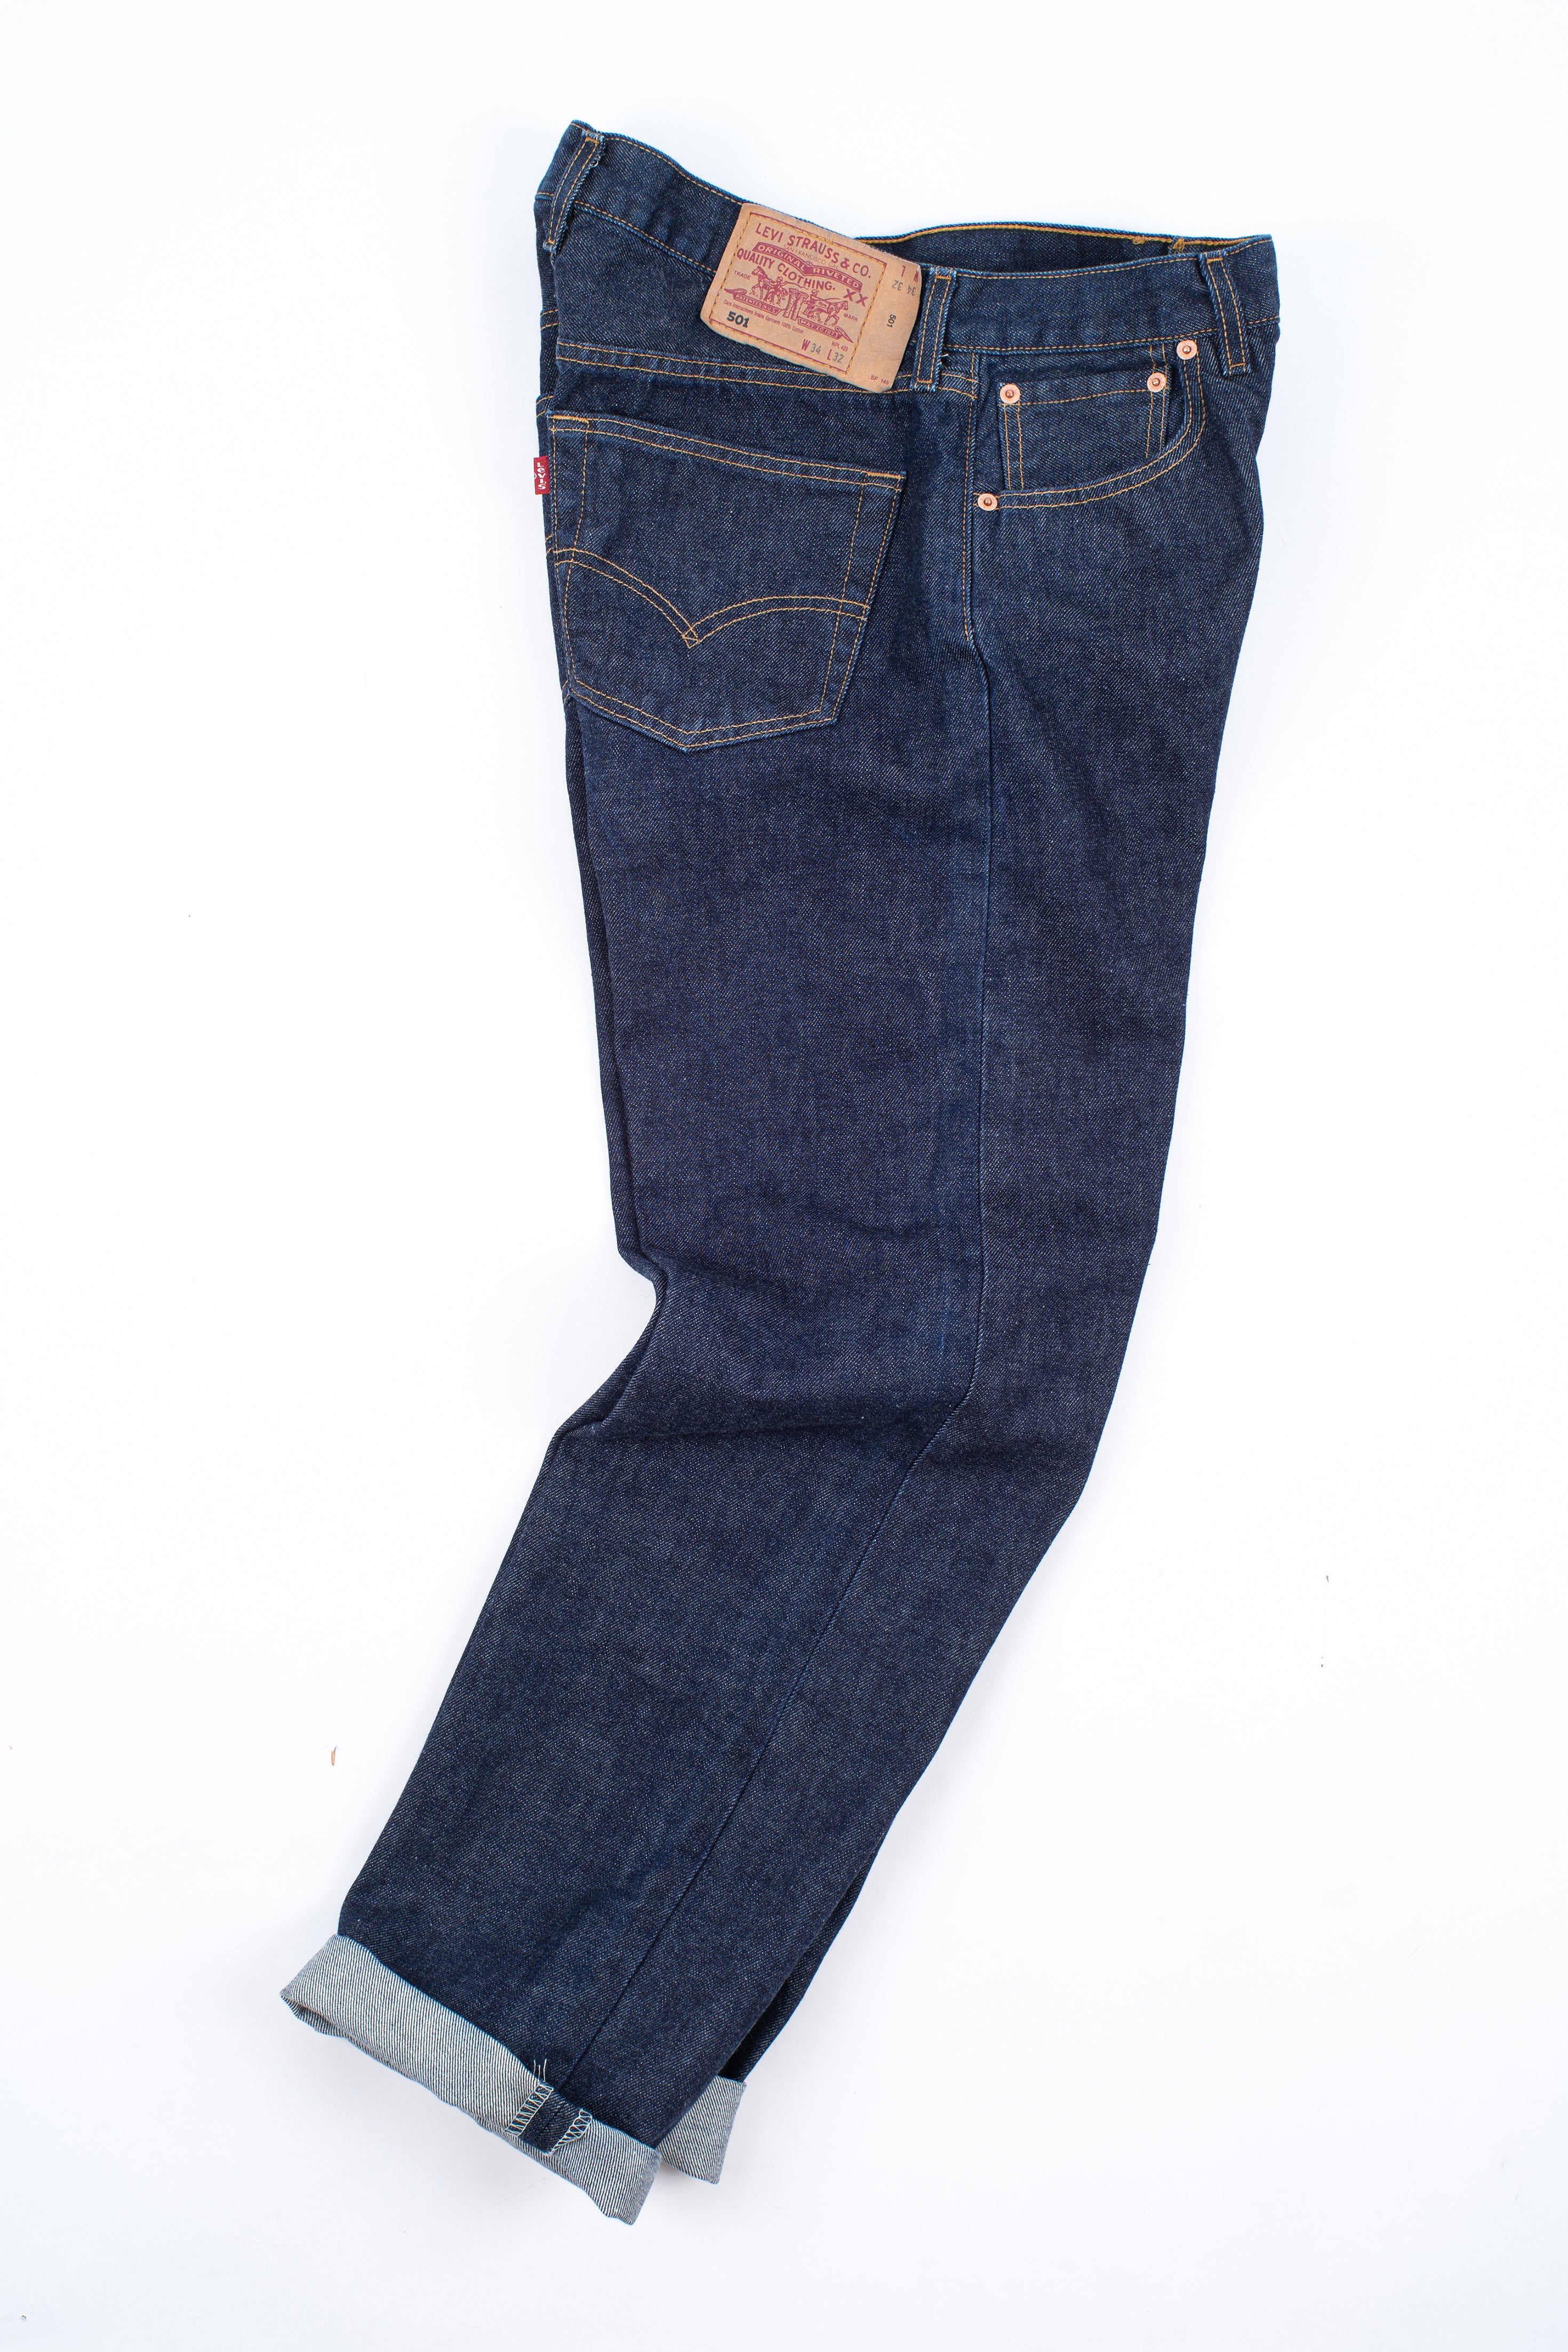 Levi’s 501 Men’s Vintage Blue Jeans Made in Spain, W32/L31